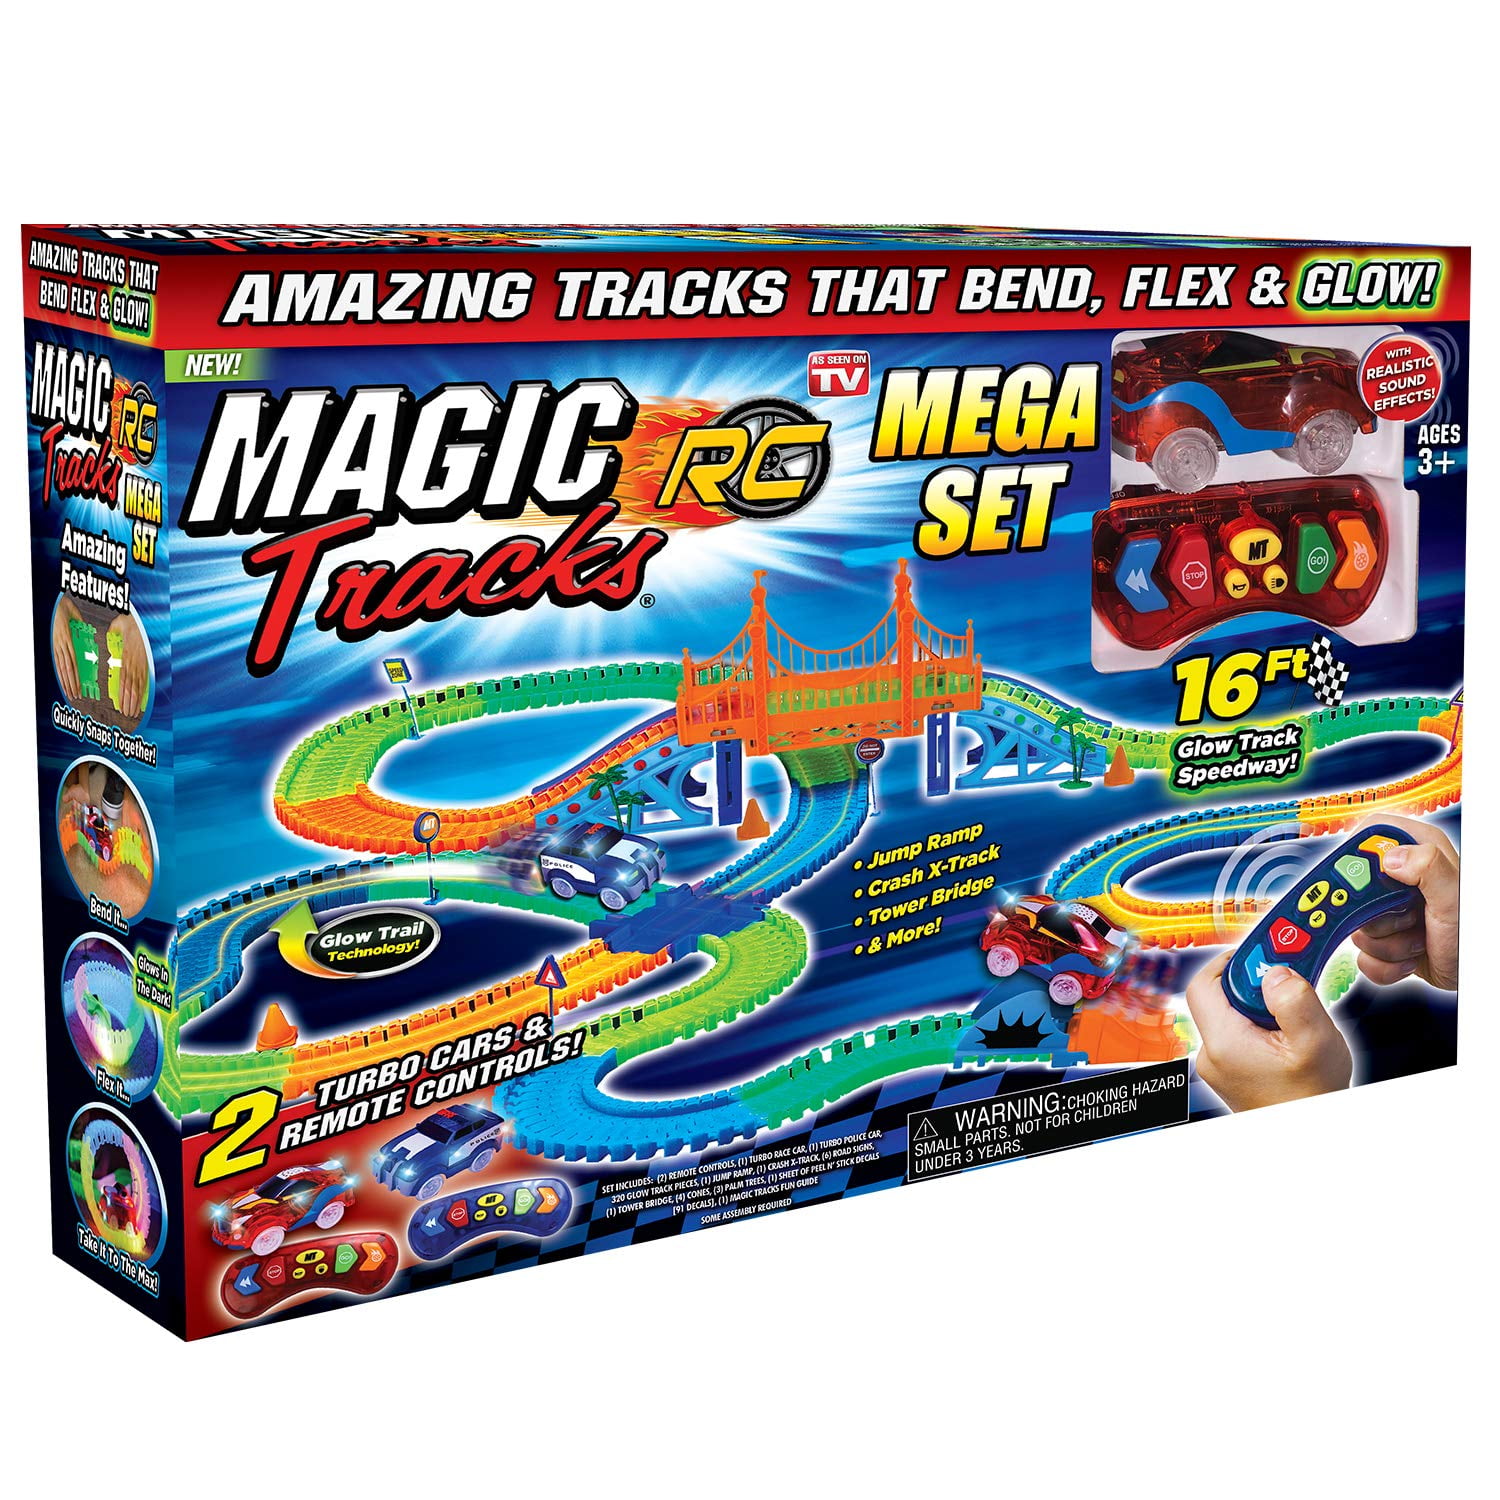 Ontel Magic Tracks RC W Remote Control Turbo Race Cars & 10 Ft Of Flexible Benda 